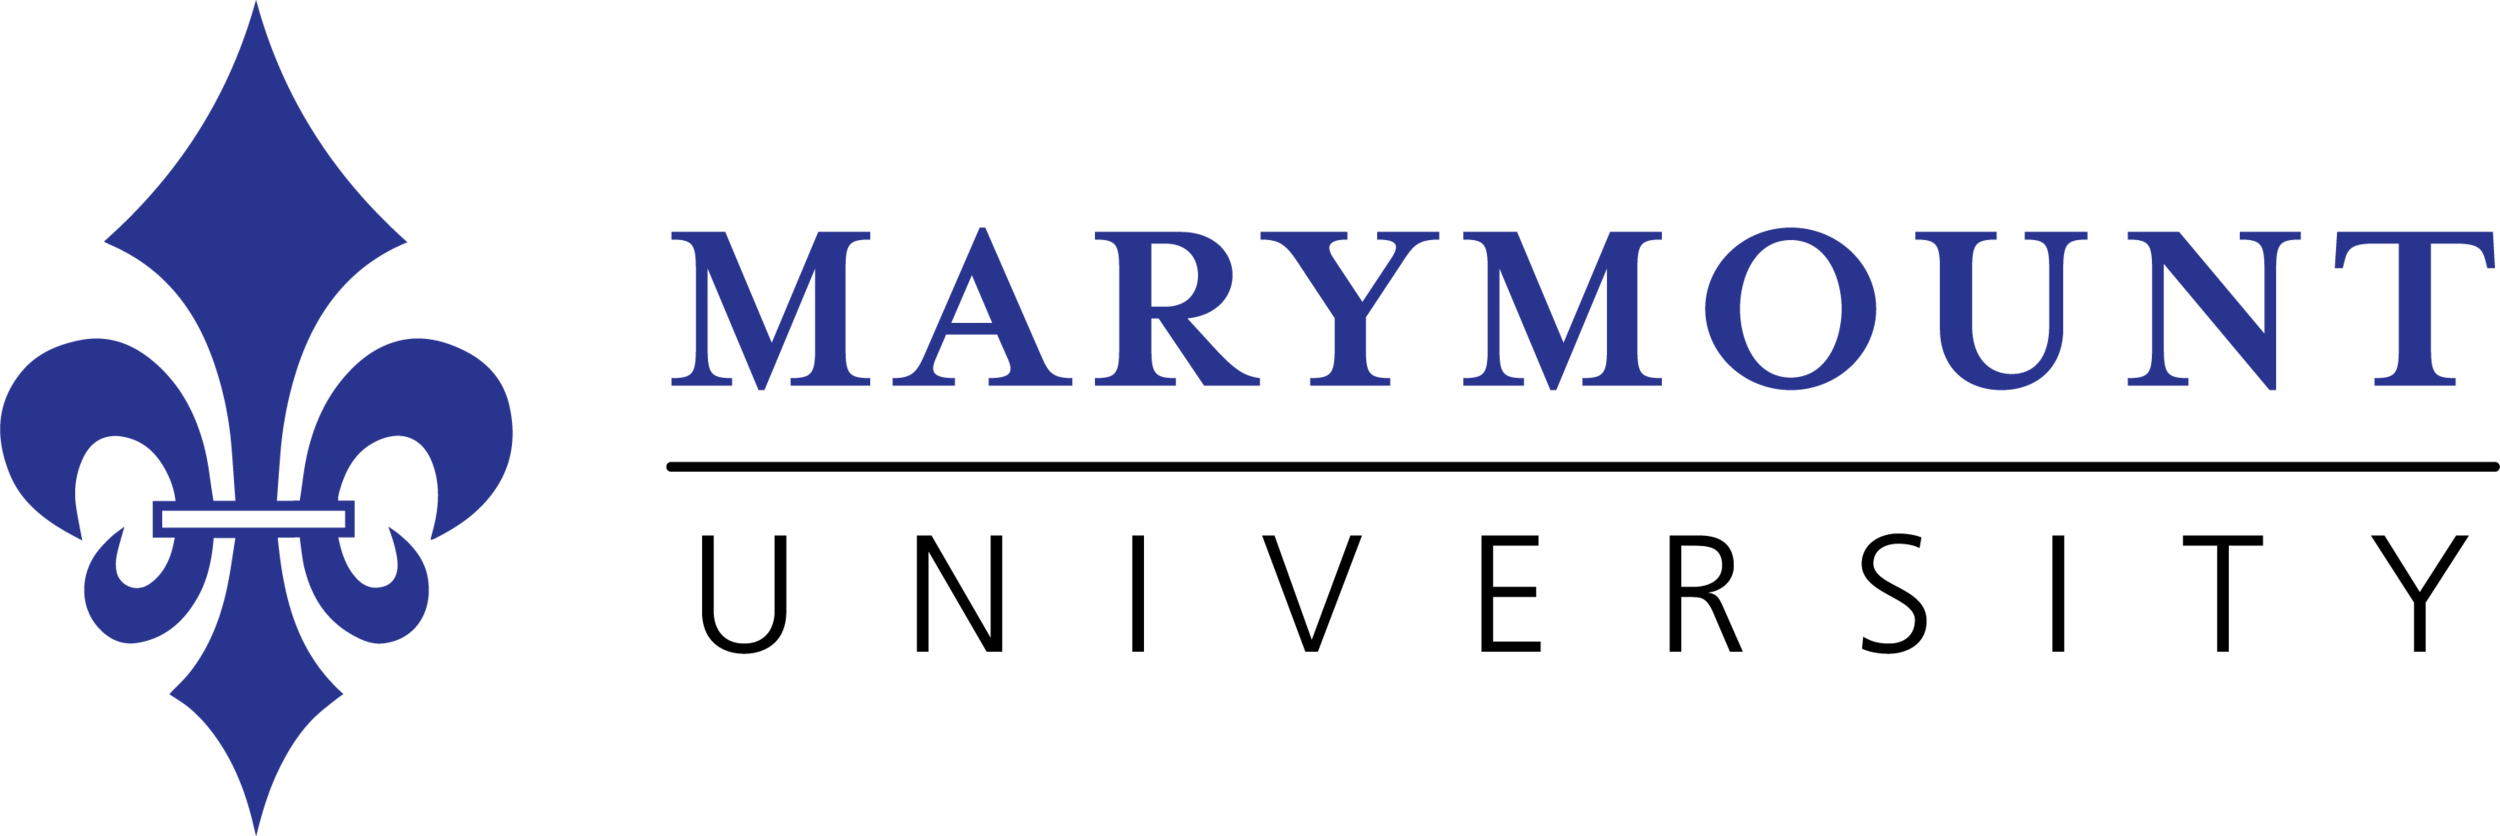 Marymount Univ. logo